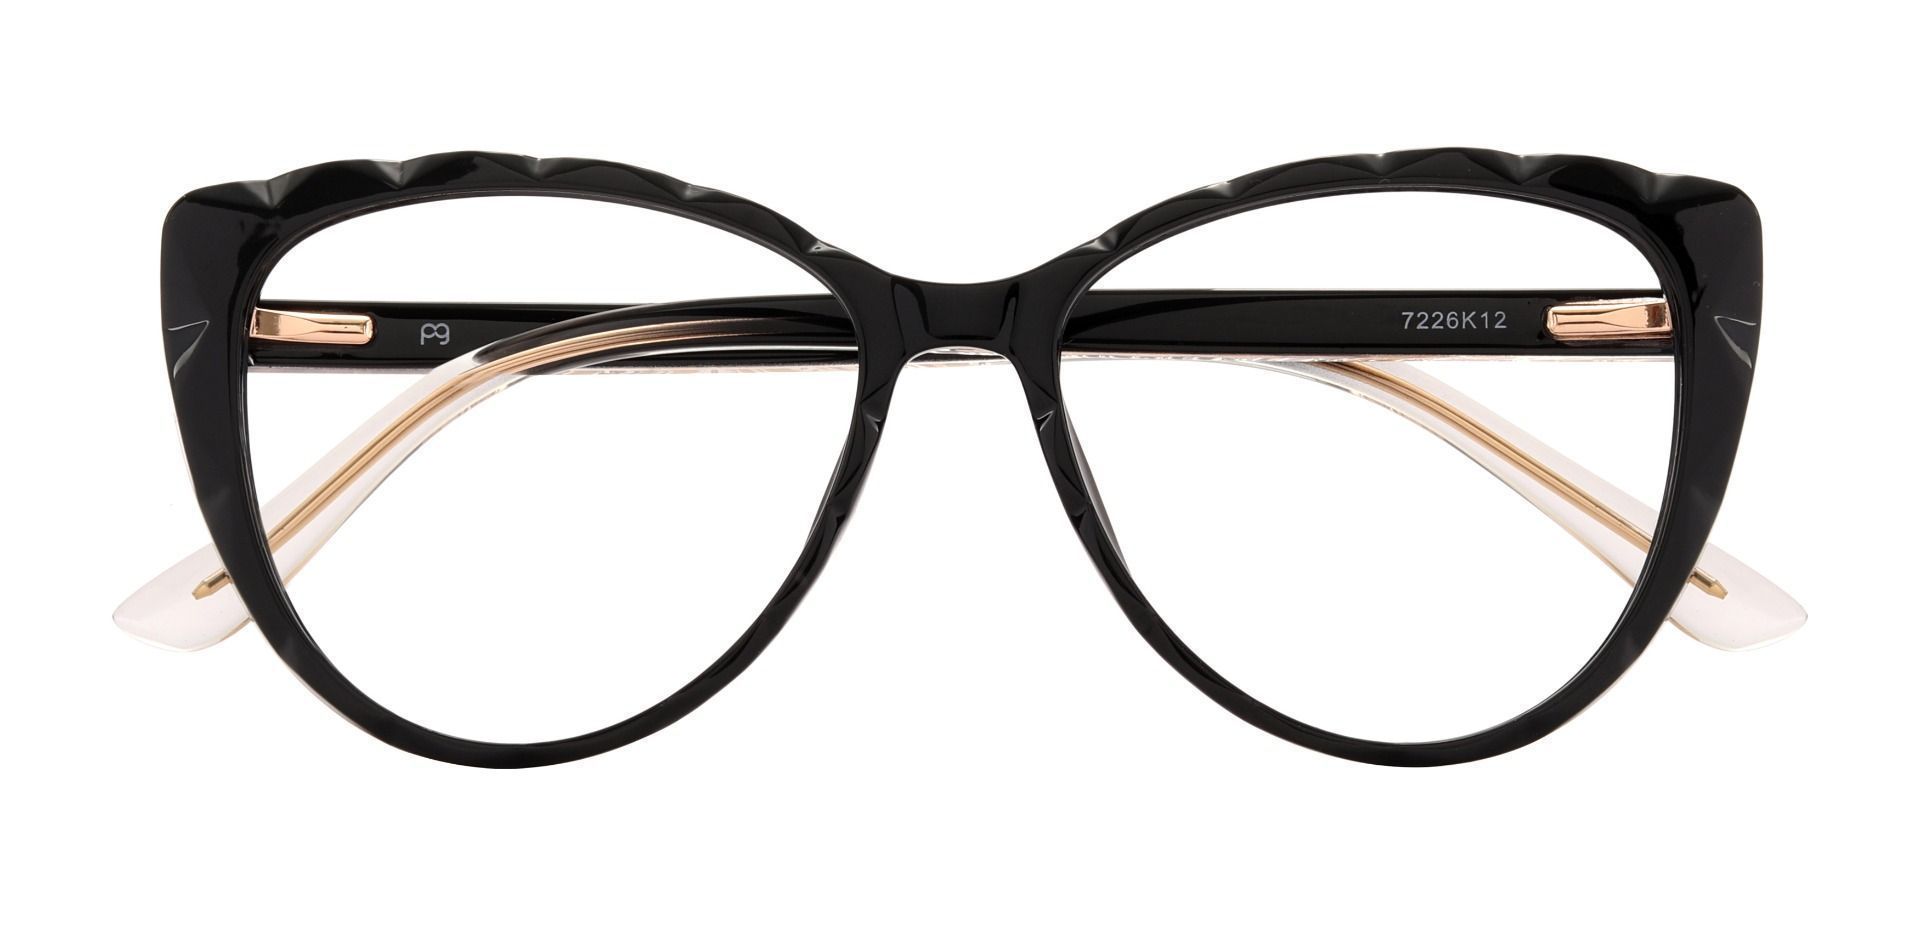 Fontaine Cat Eye Prescription Glasses - Black